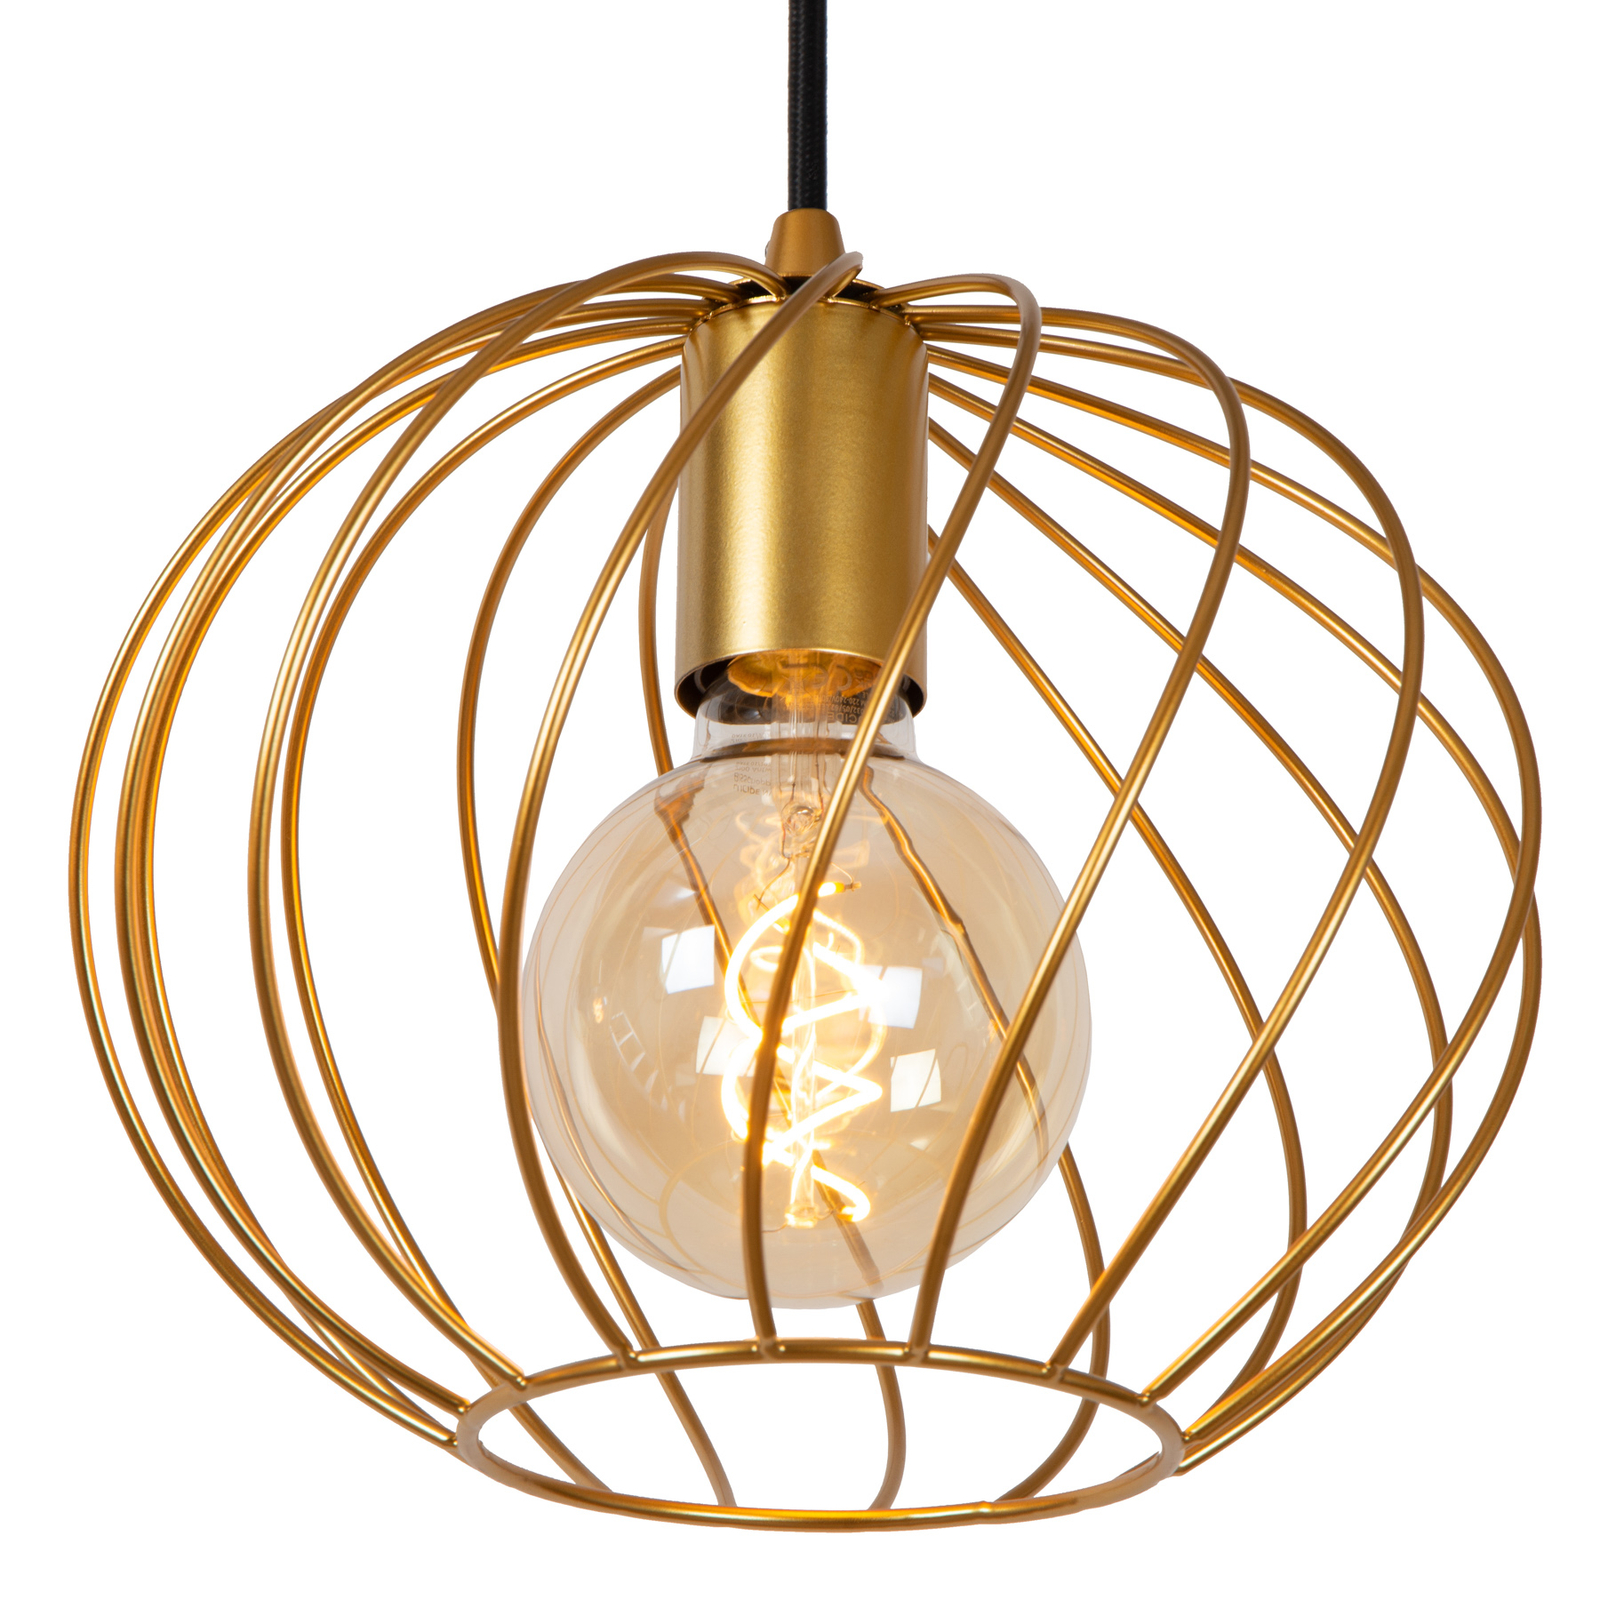 Hanglamp Danza, 3-lamps, rond, goud